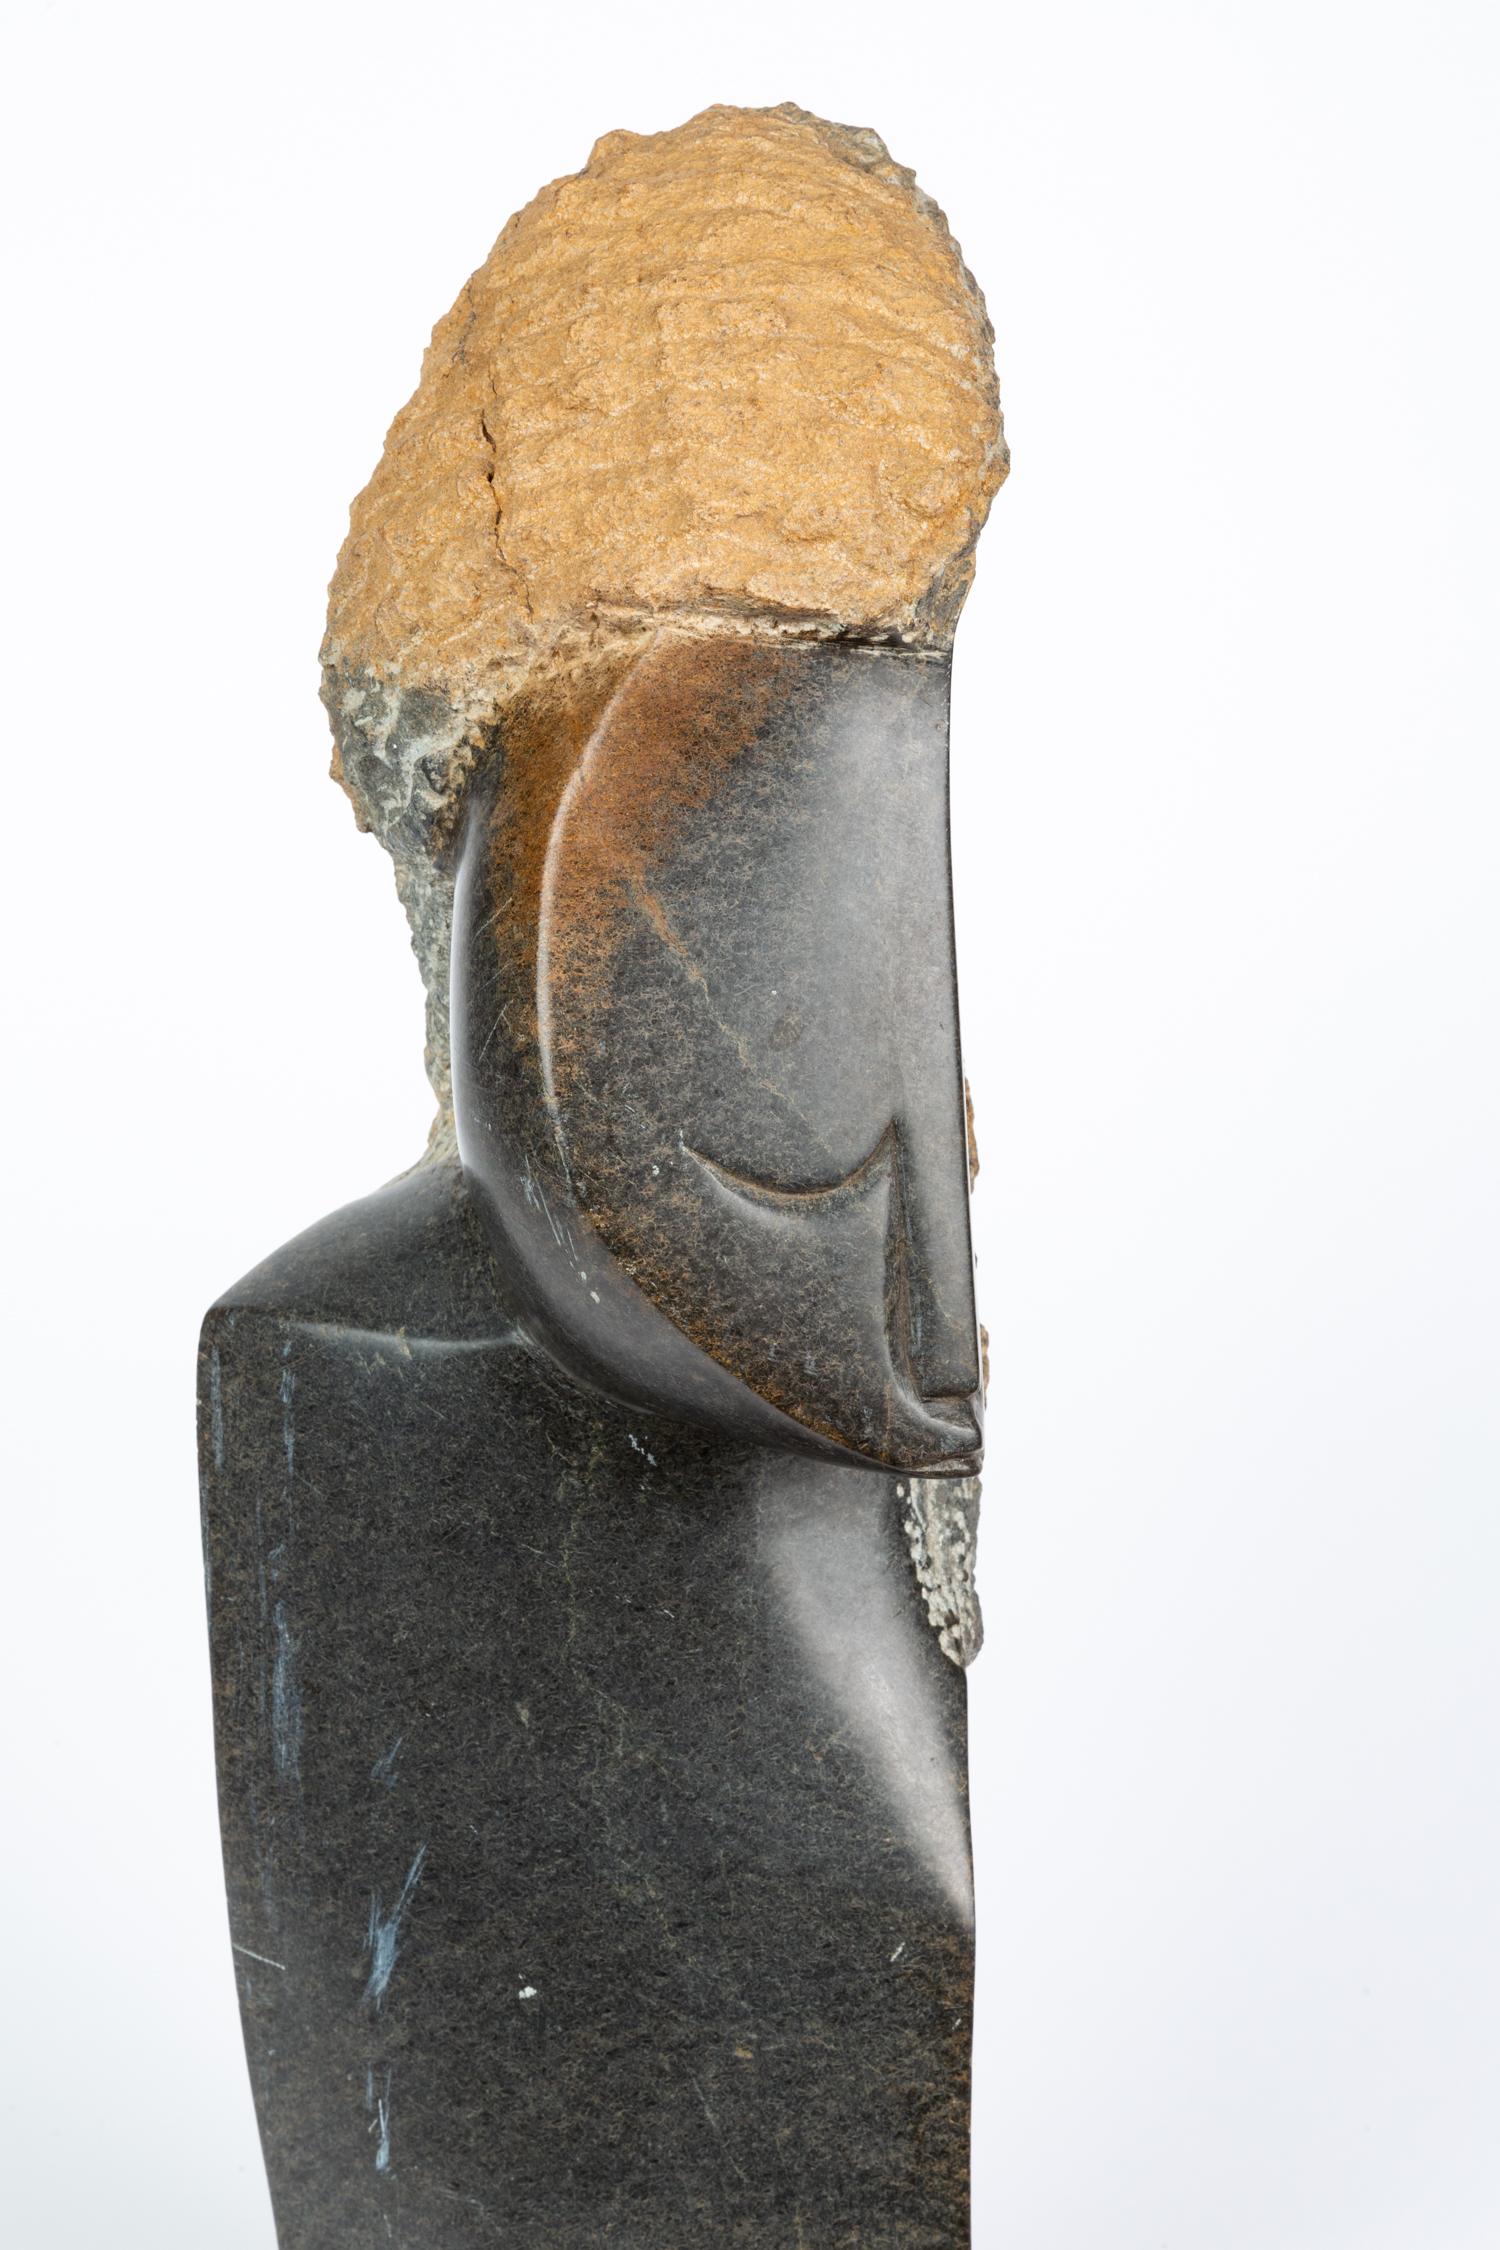 Stone Shona Sculpture of Solitary Figure